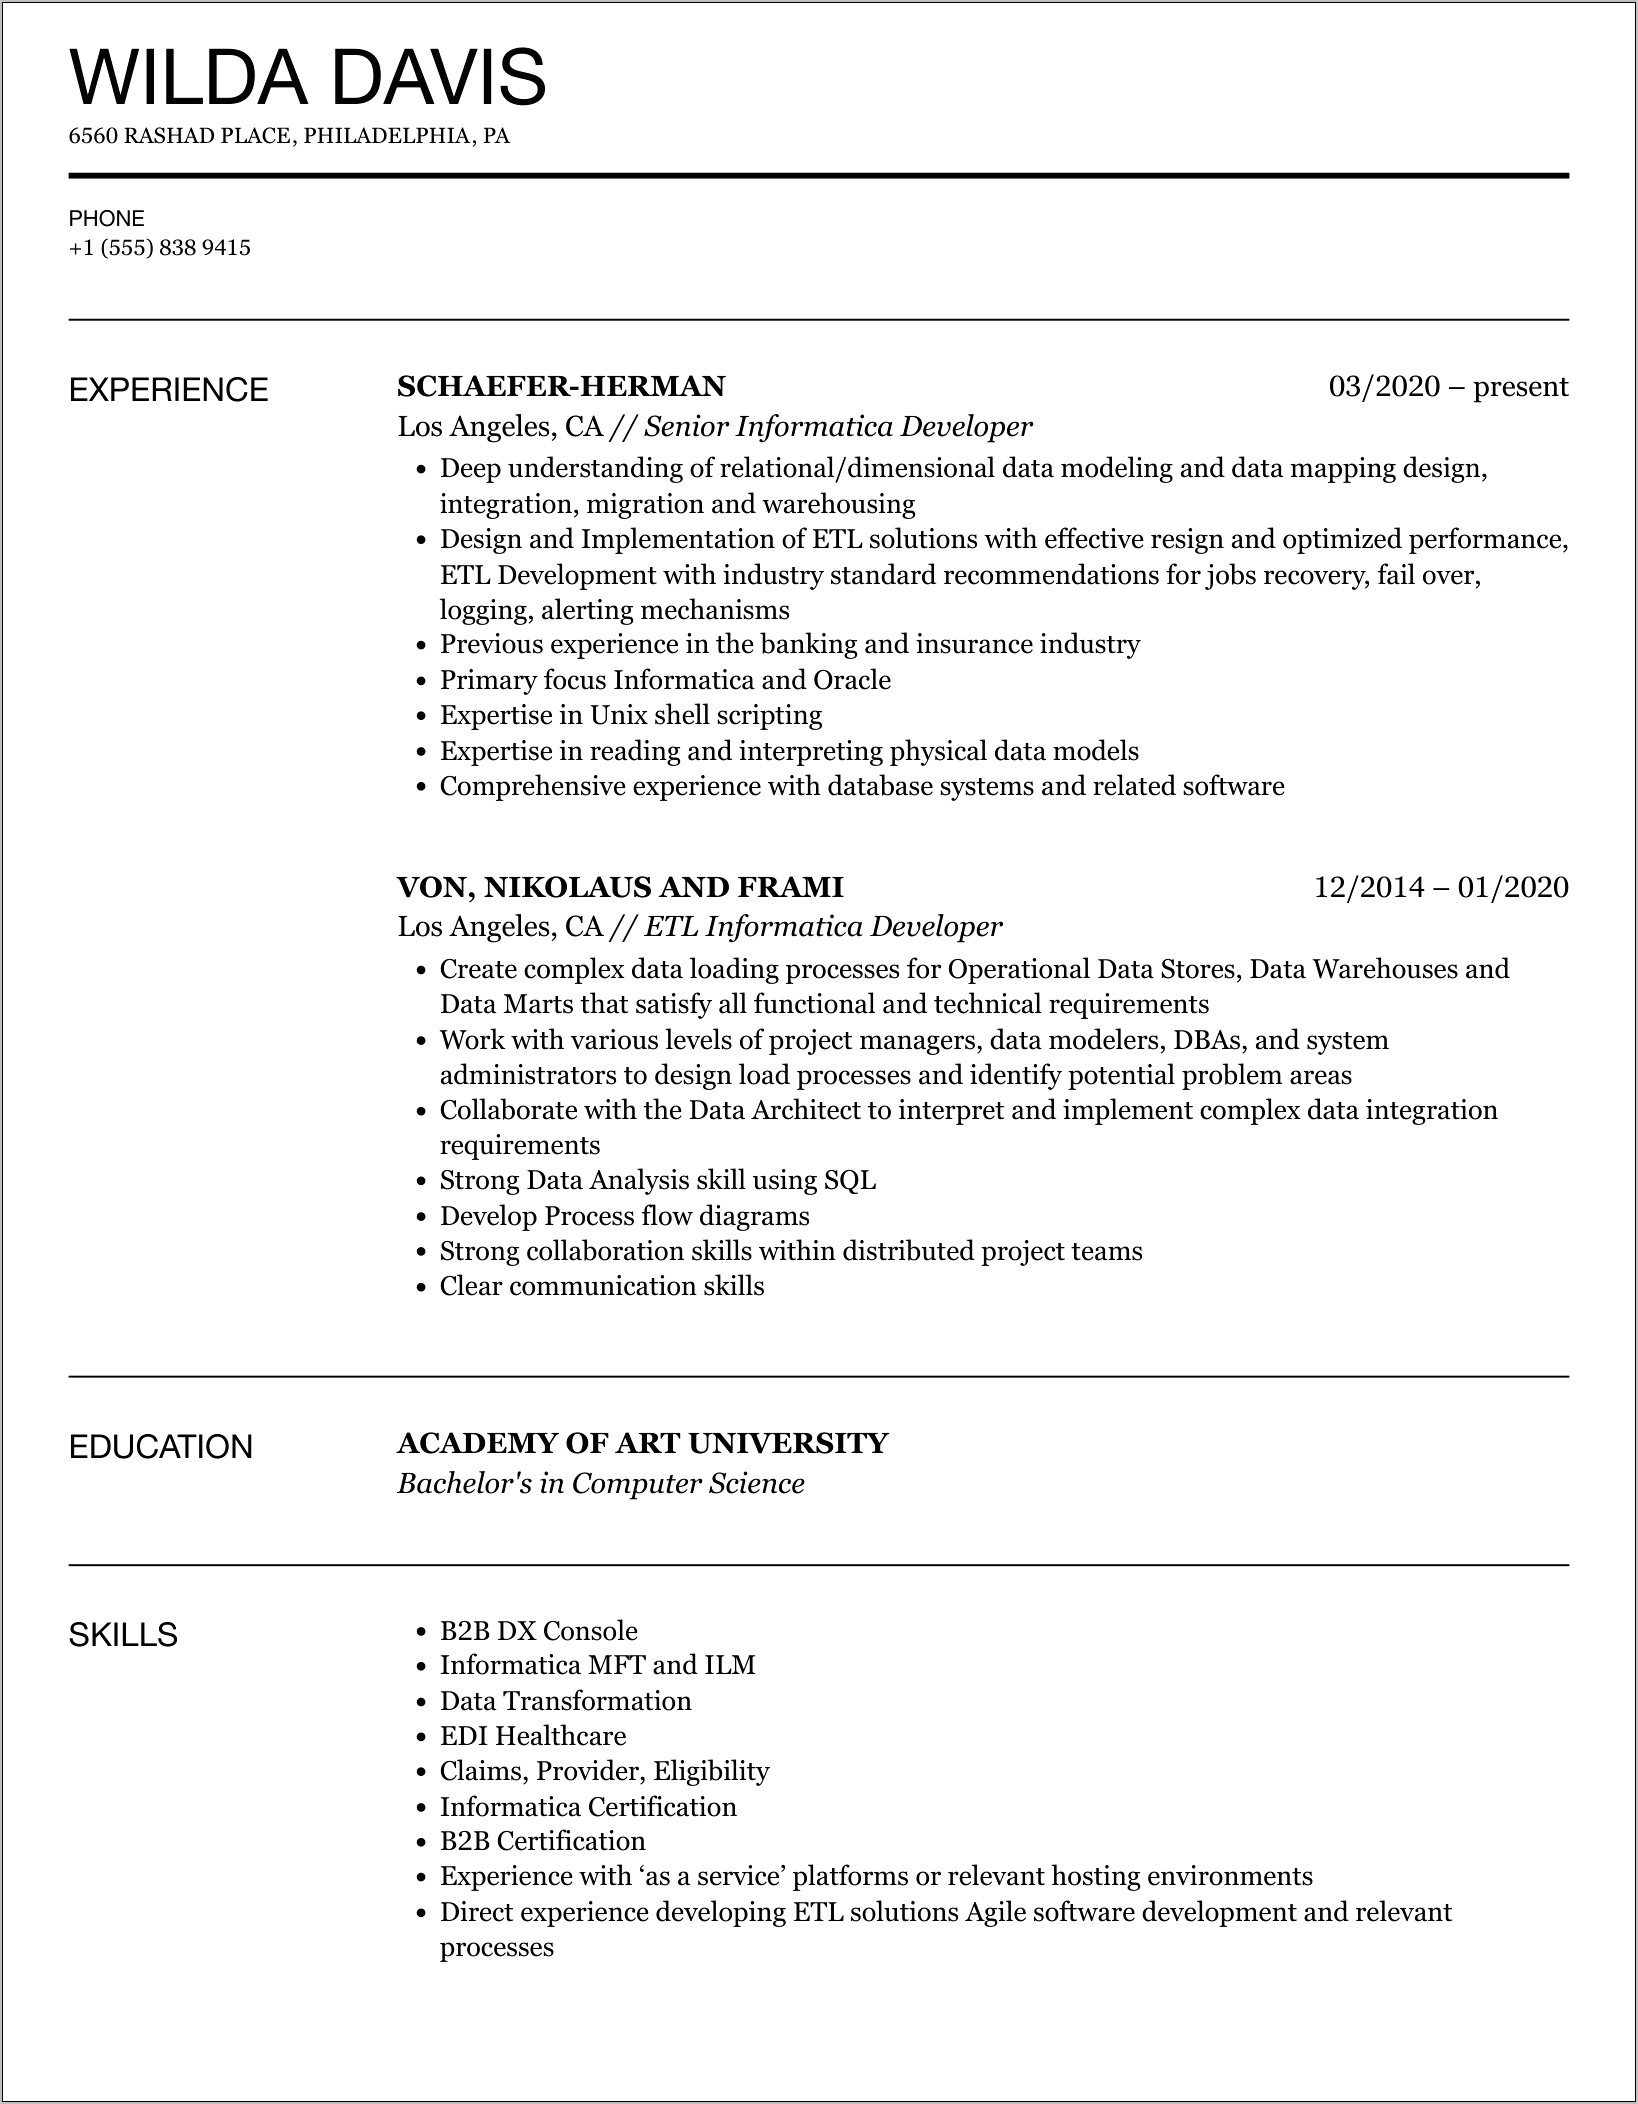 Sample Resume Of Informatica Bde